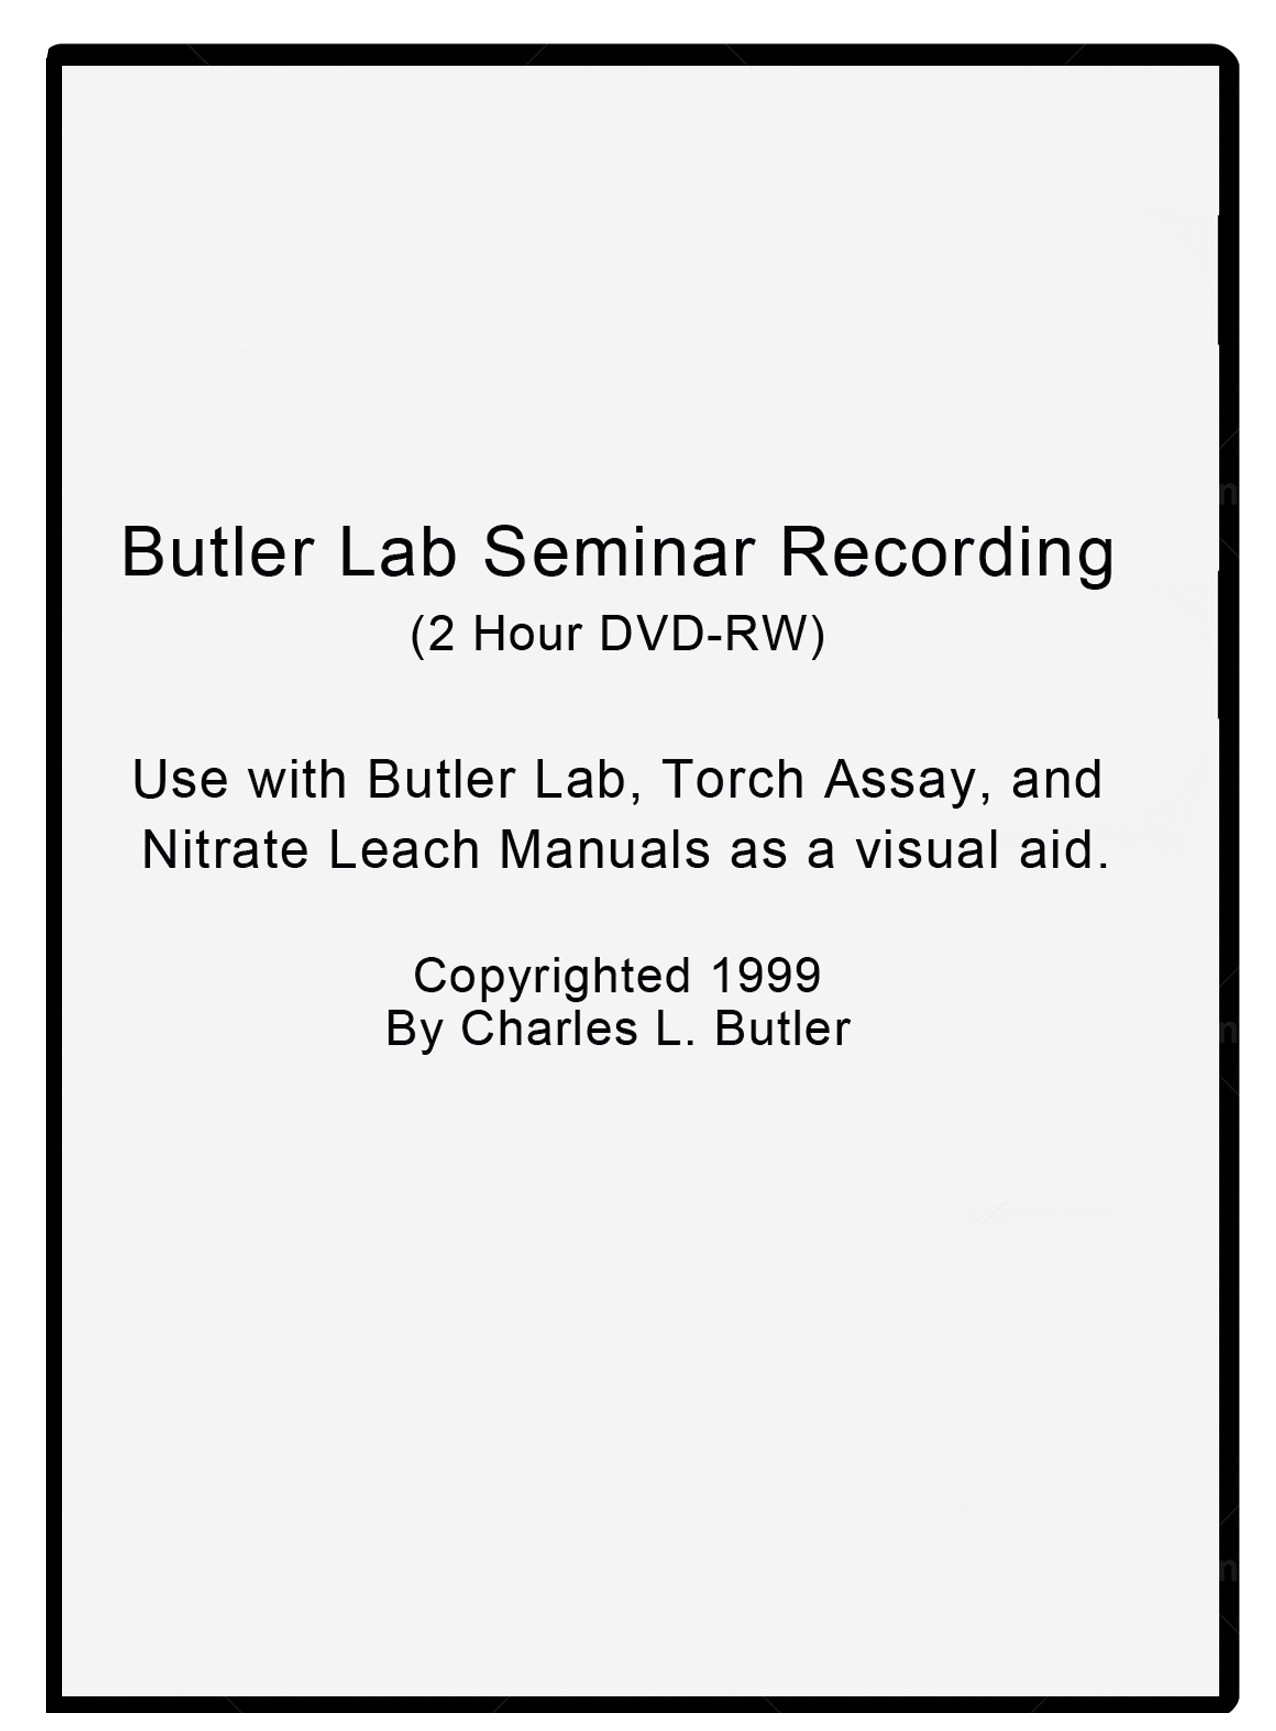 Butler Lab Seminar Recording DVD by Charles Butler